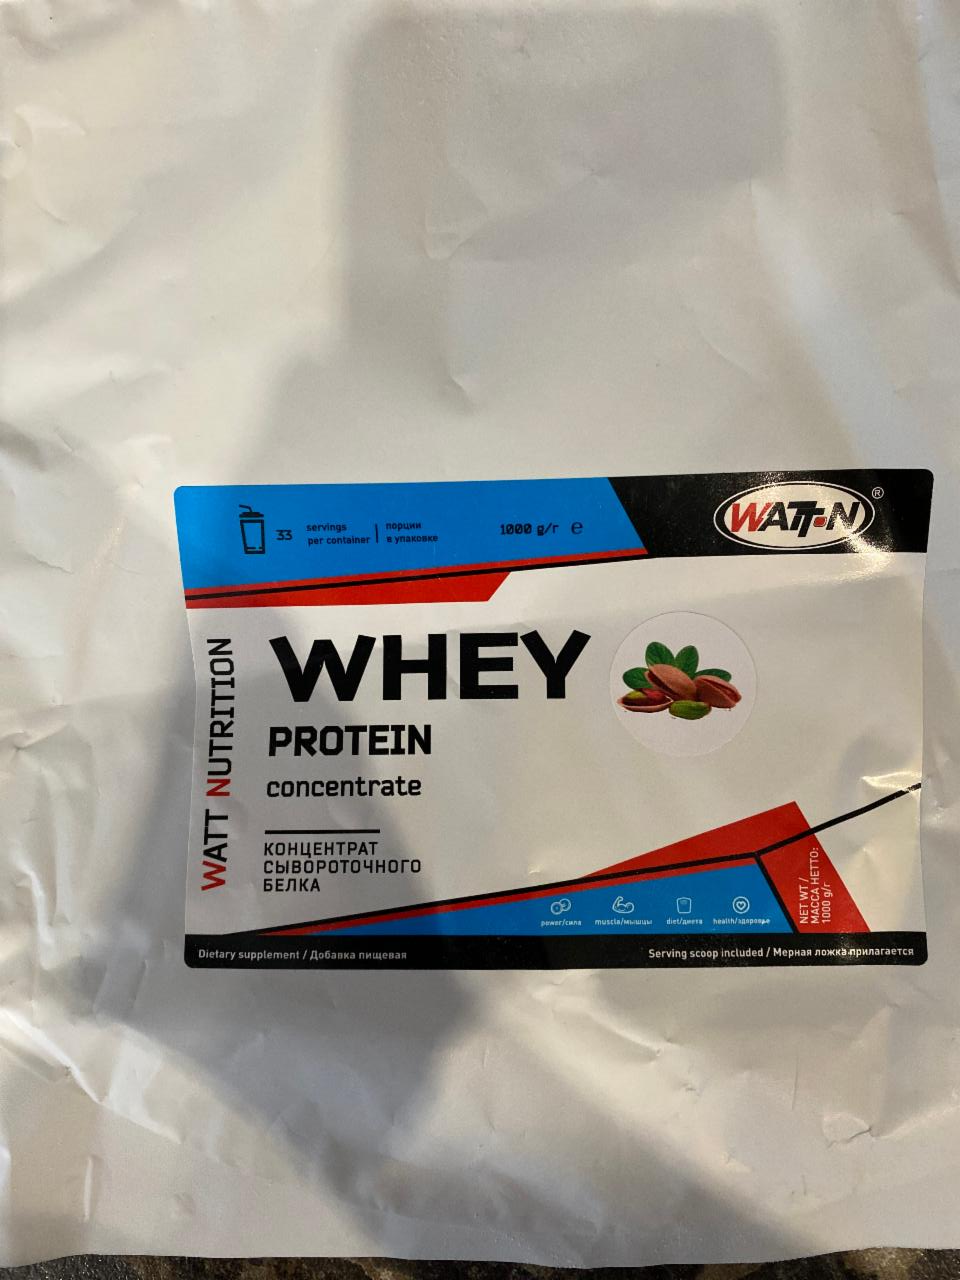 Фото - Концентрат сывороточного белка Whey Protein concentrate pistachio Watt nutrition